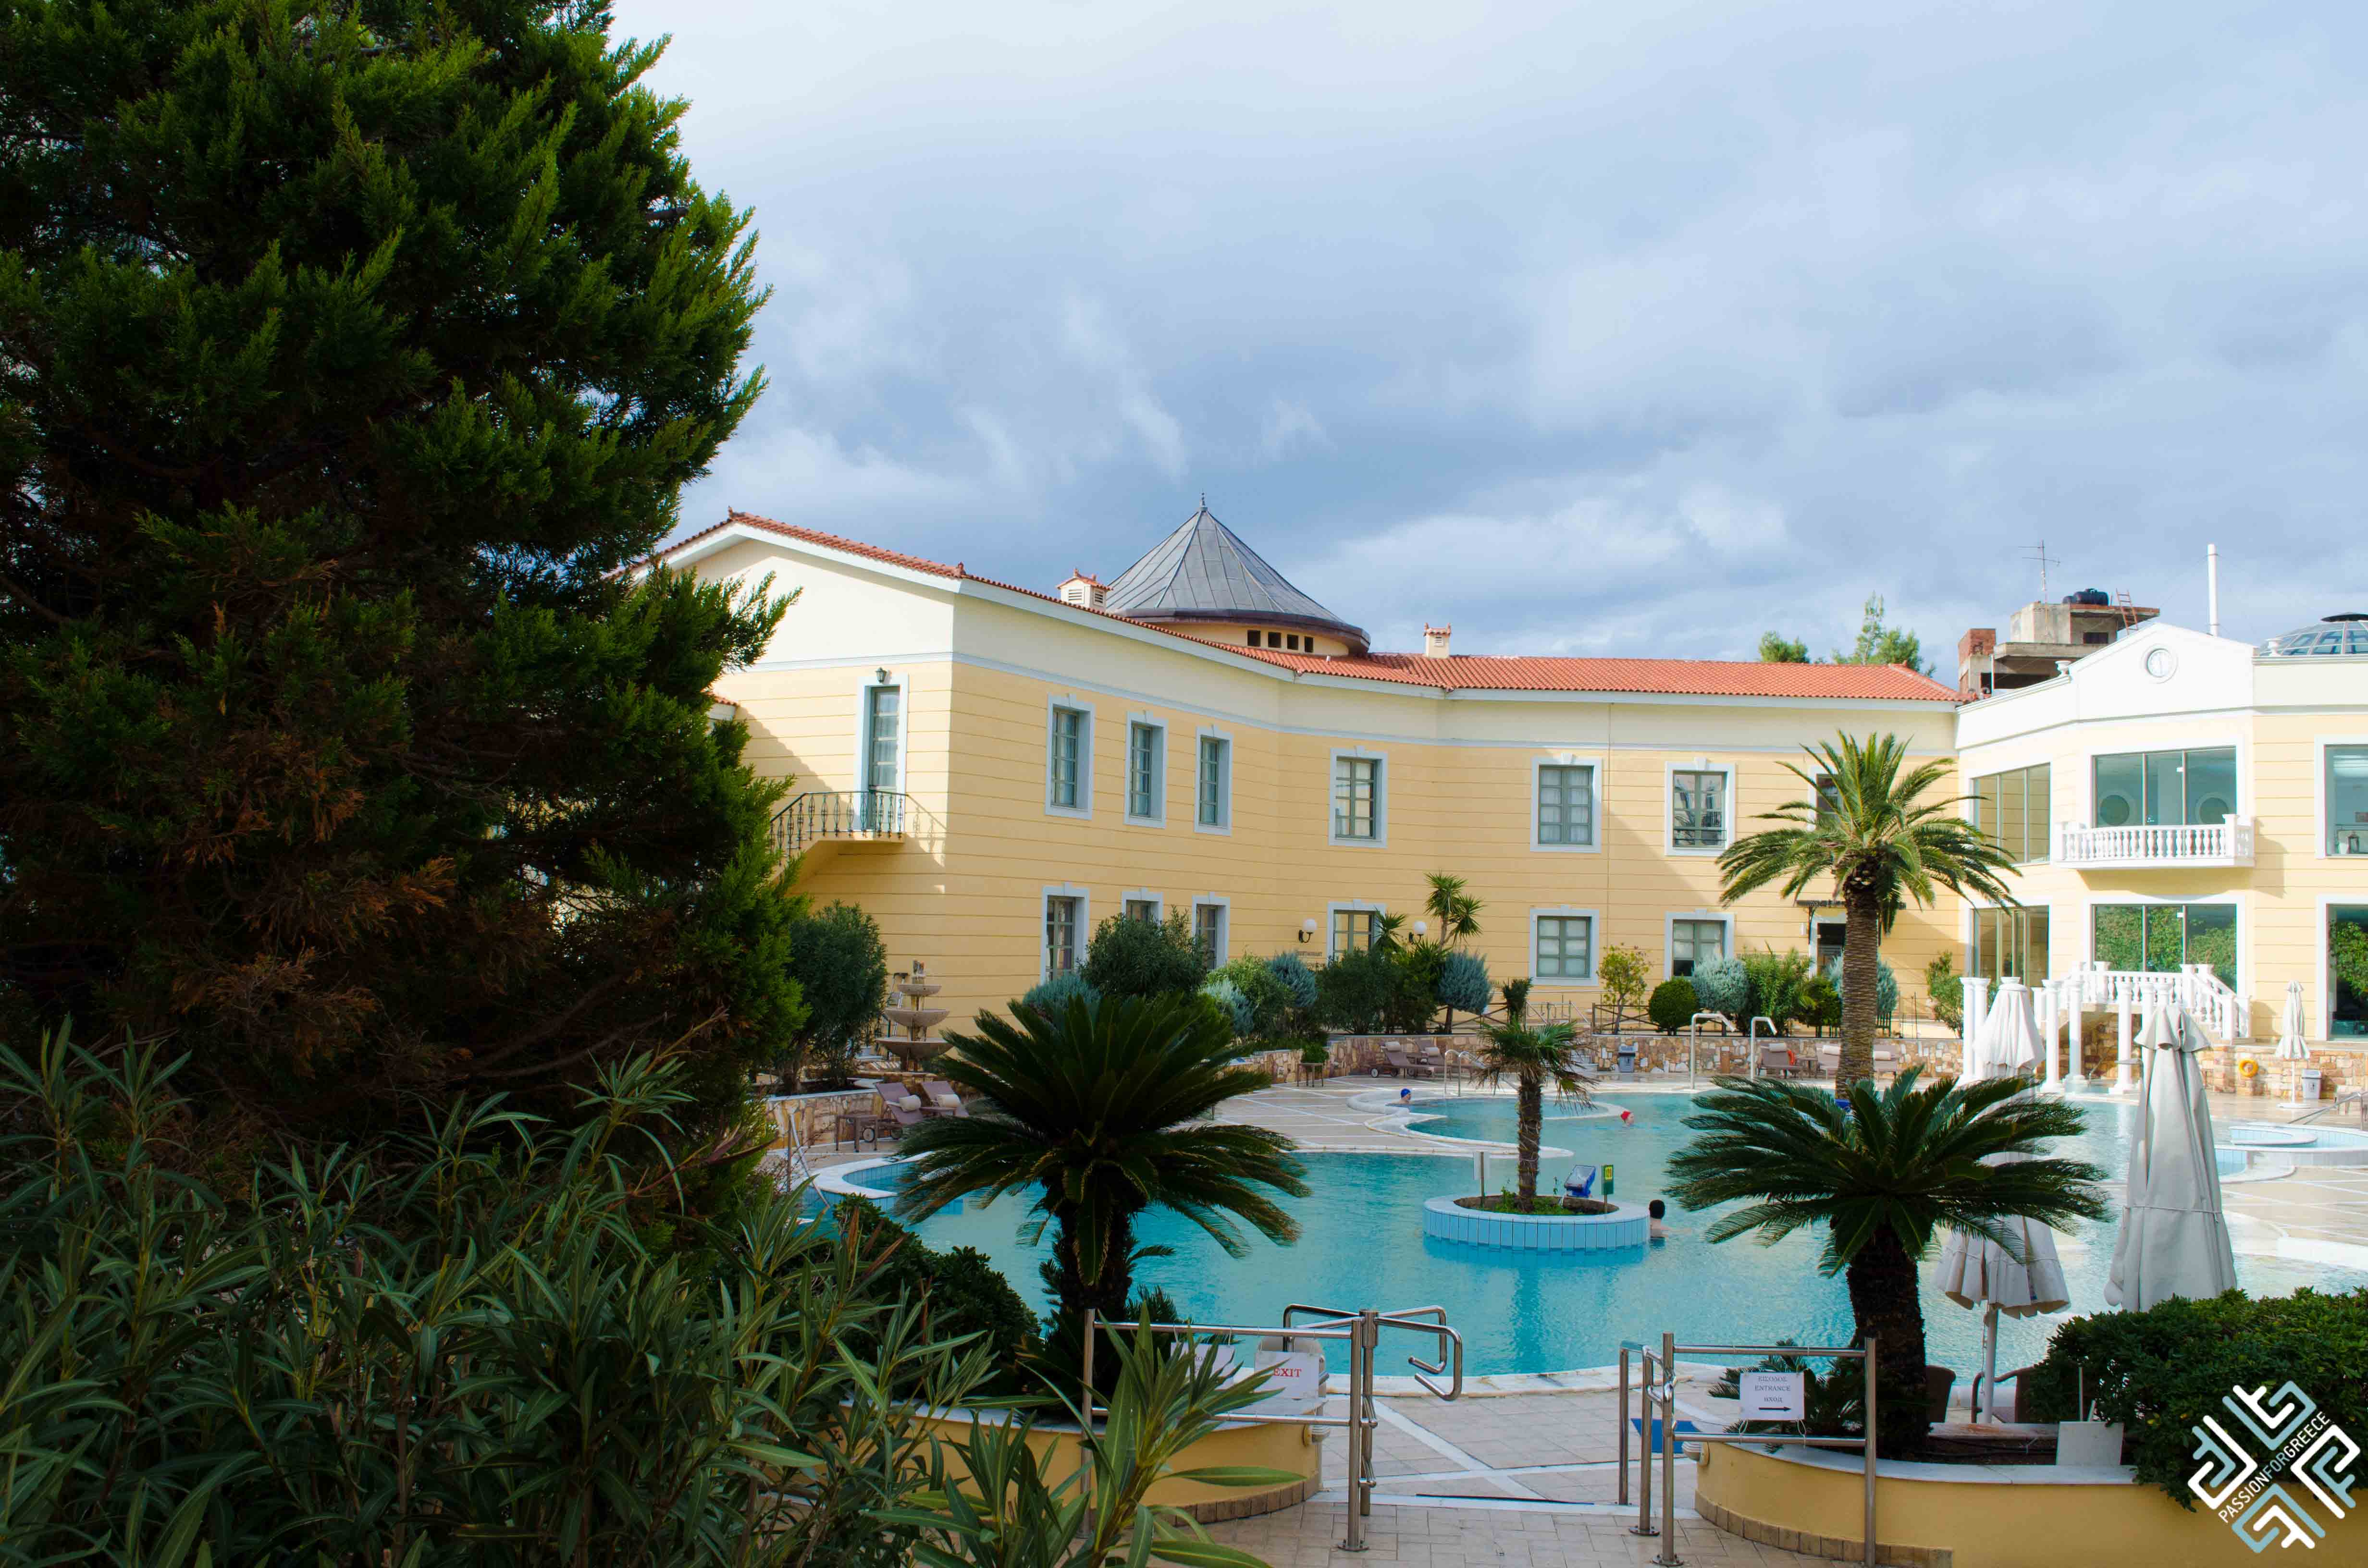 Thermae Sylla Spa & Wellness Hotel in Edipsos, Greece